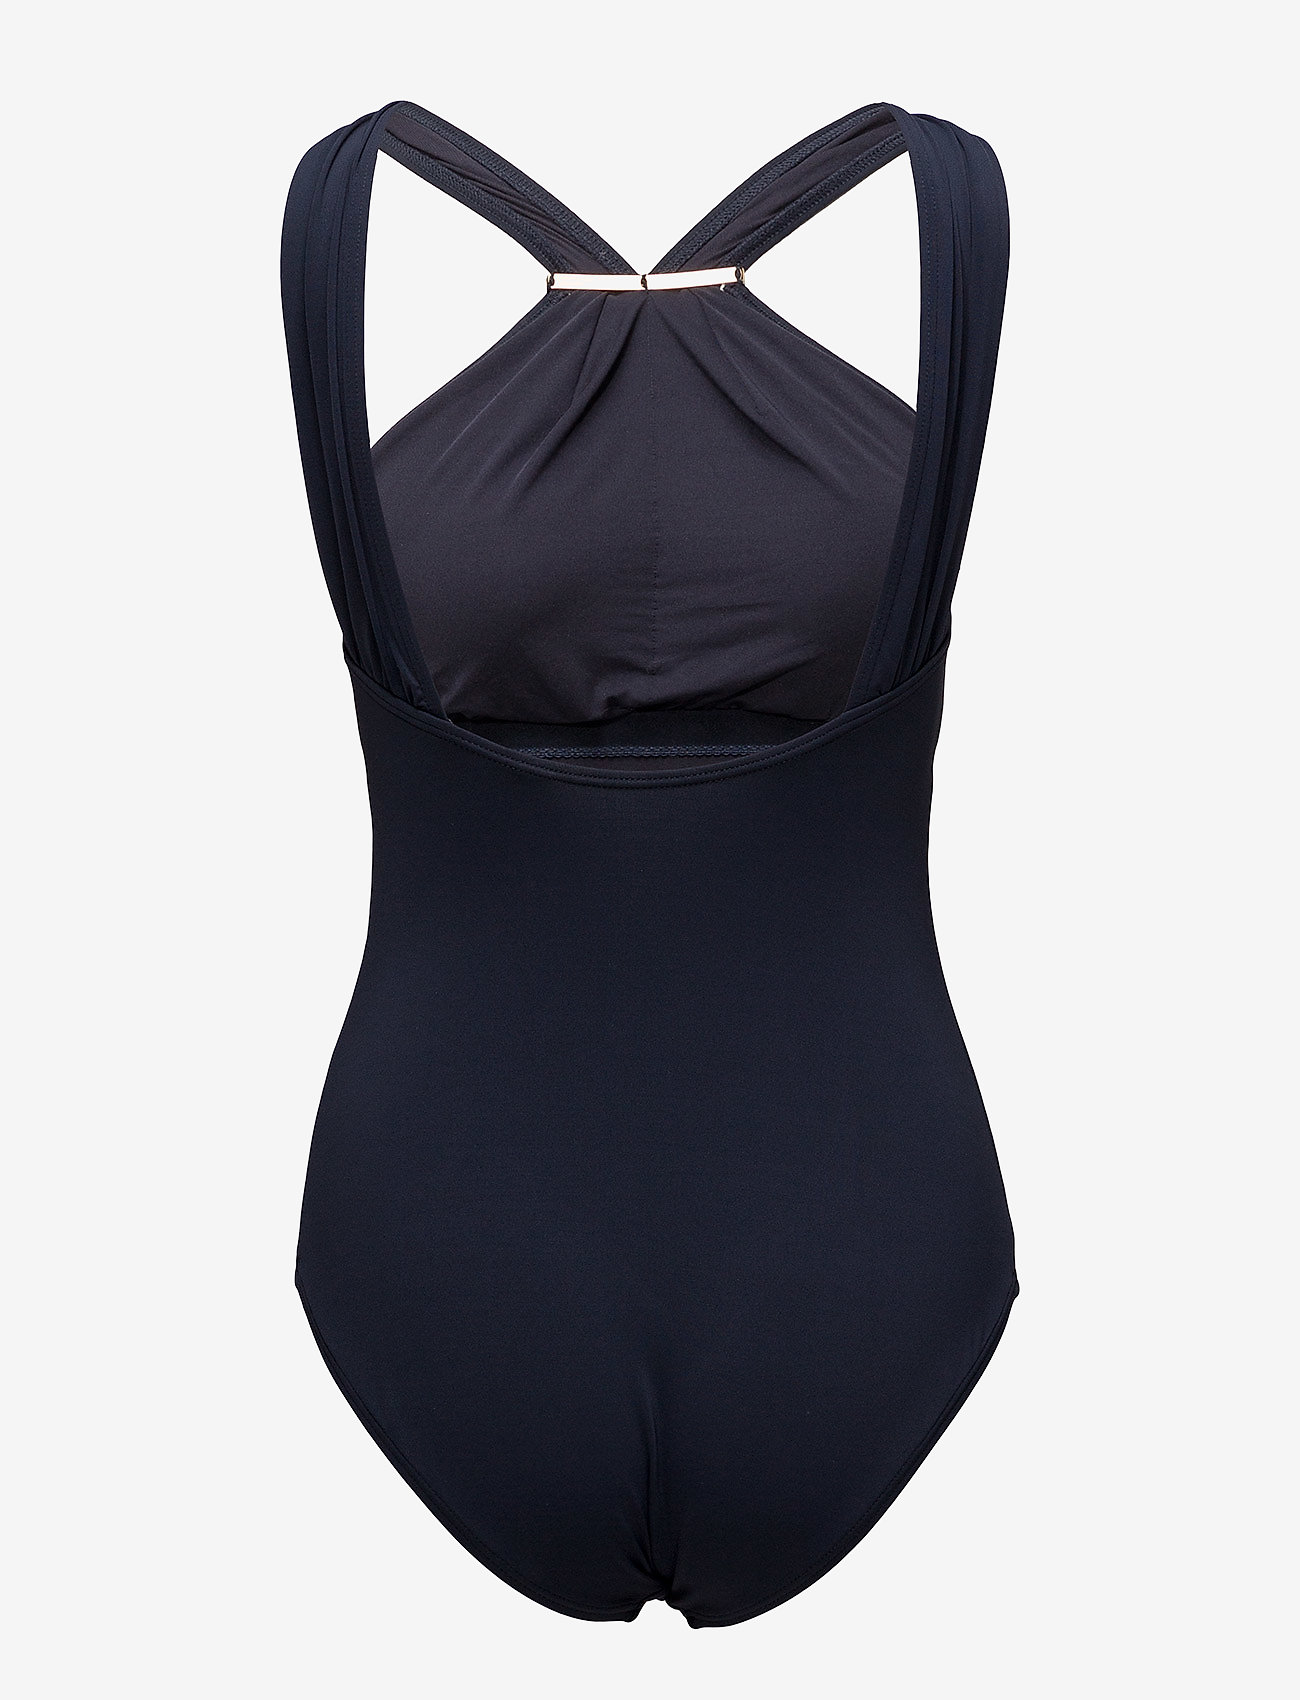 Michael Kors Swimwear Hi-neck 1pcs (New Navy) - 1499 kr | Boozt.com